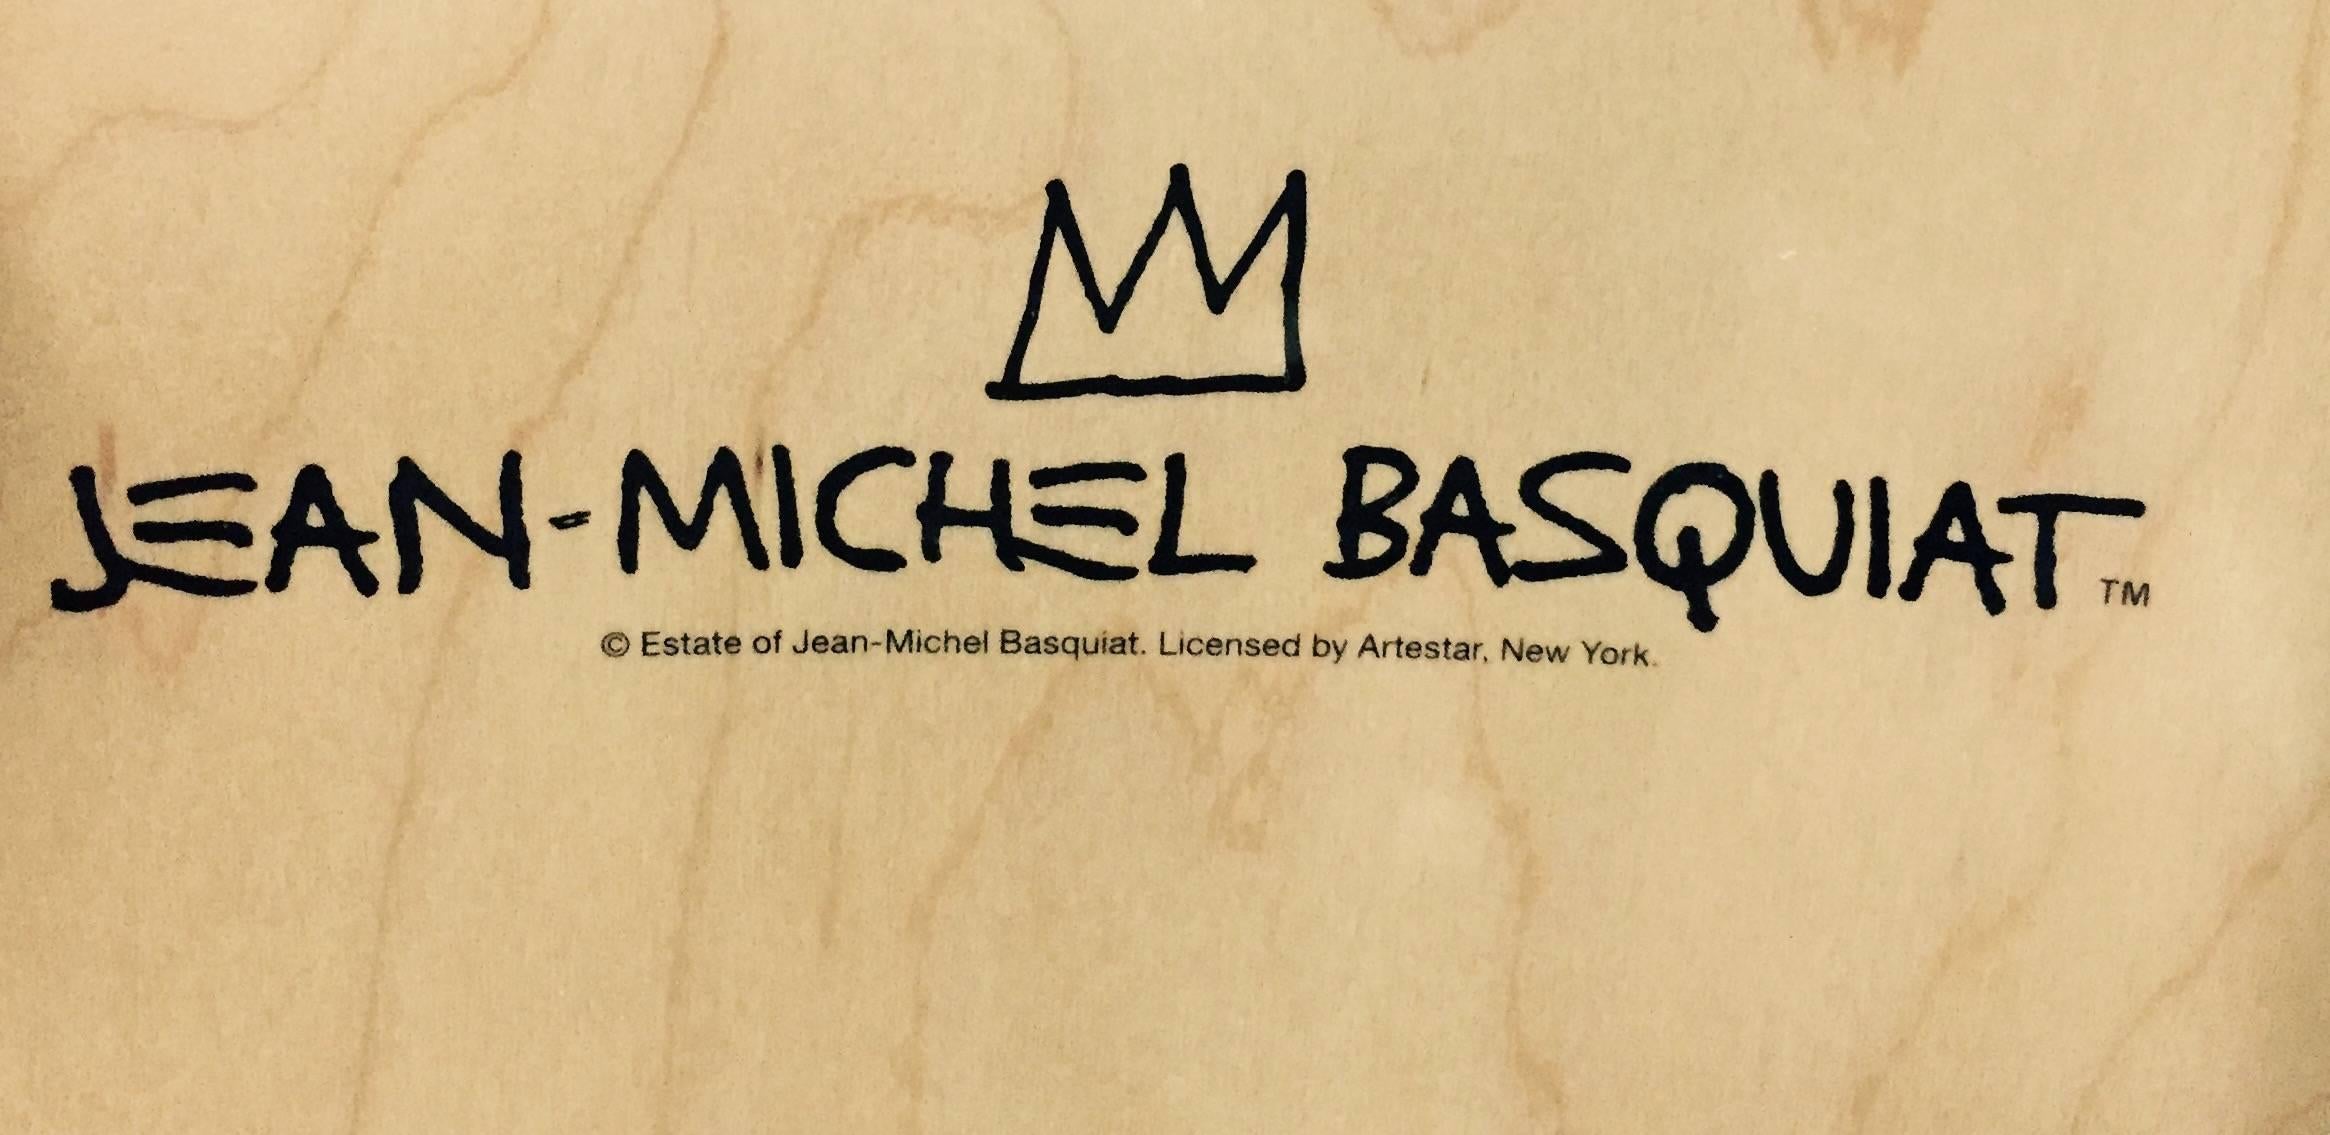 The Skateroom x Estate of Jean-Michel Basquiat Horn Players (set of 3 decks) For Sale 1